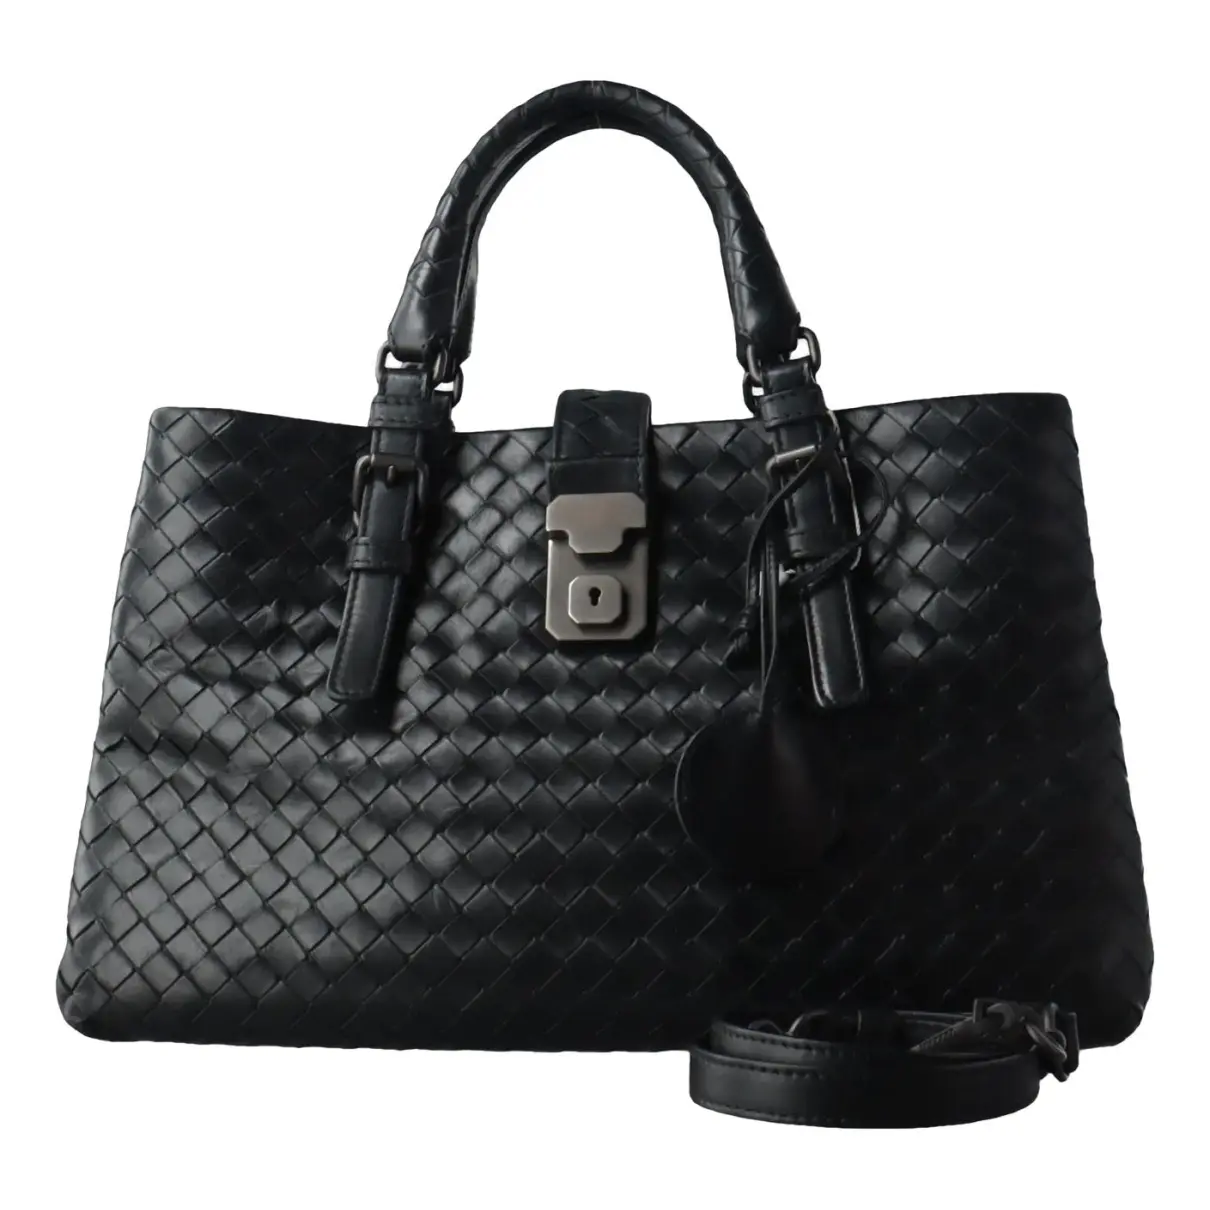 Roma leather handbag